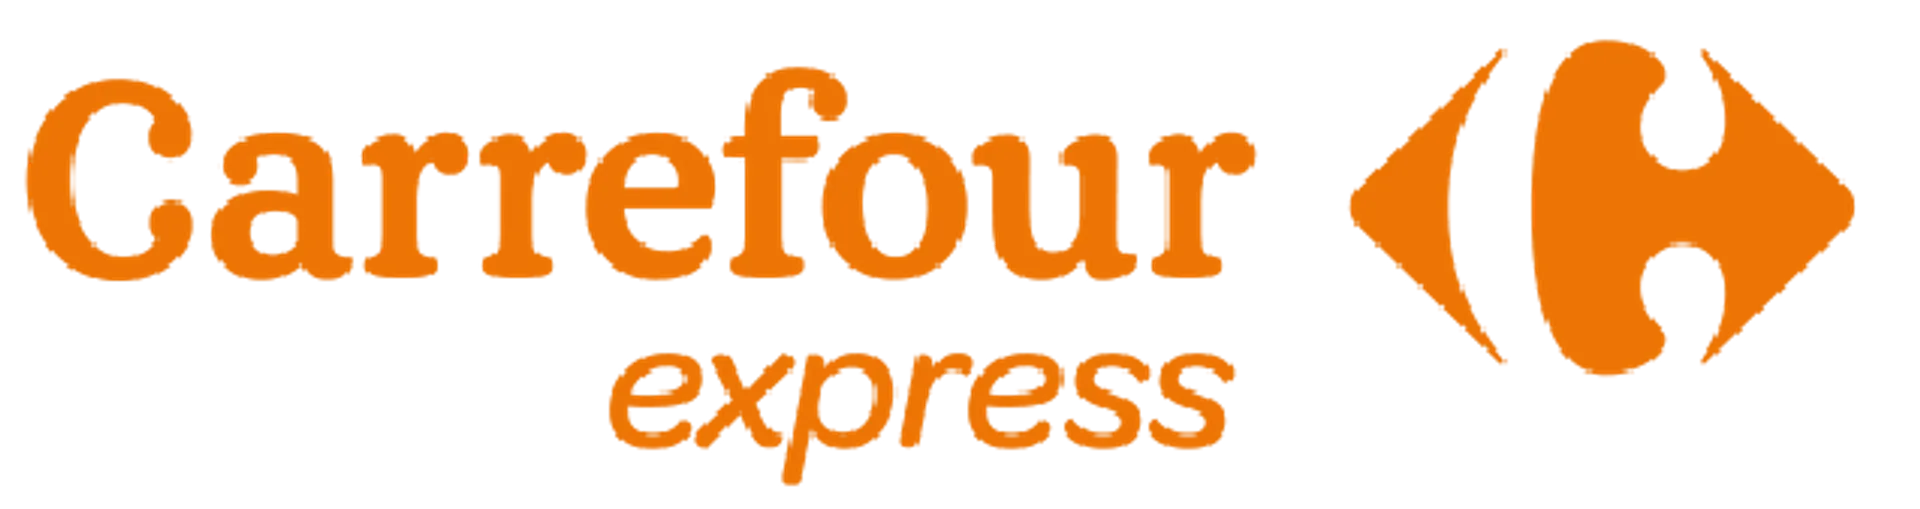 CARREFOUR EXPRESS logo